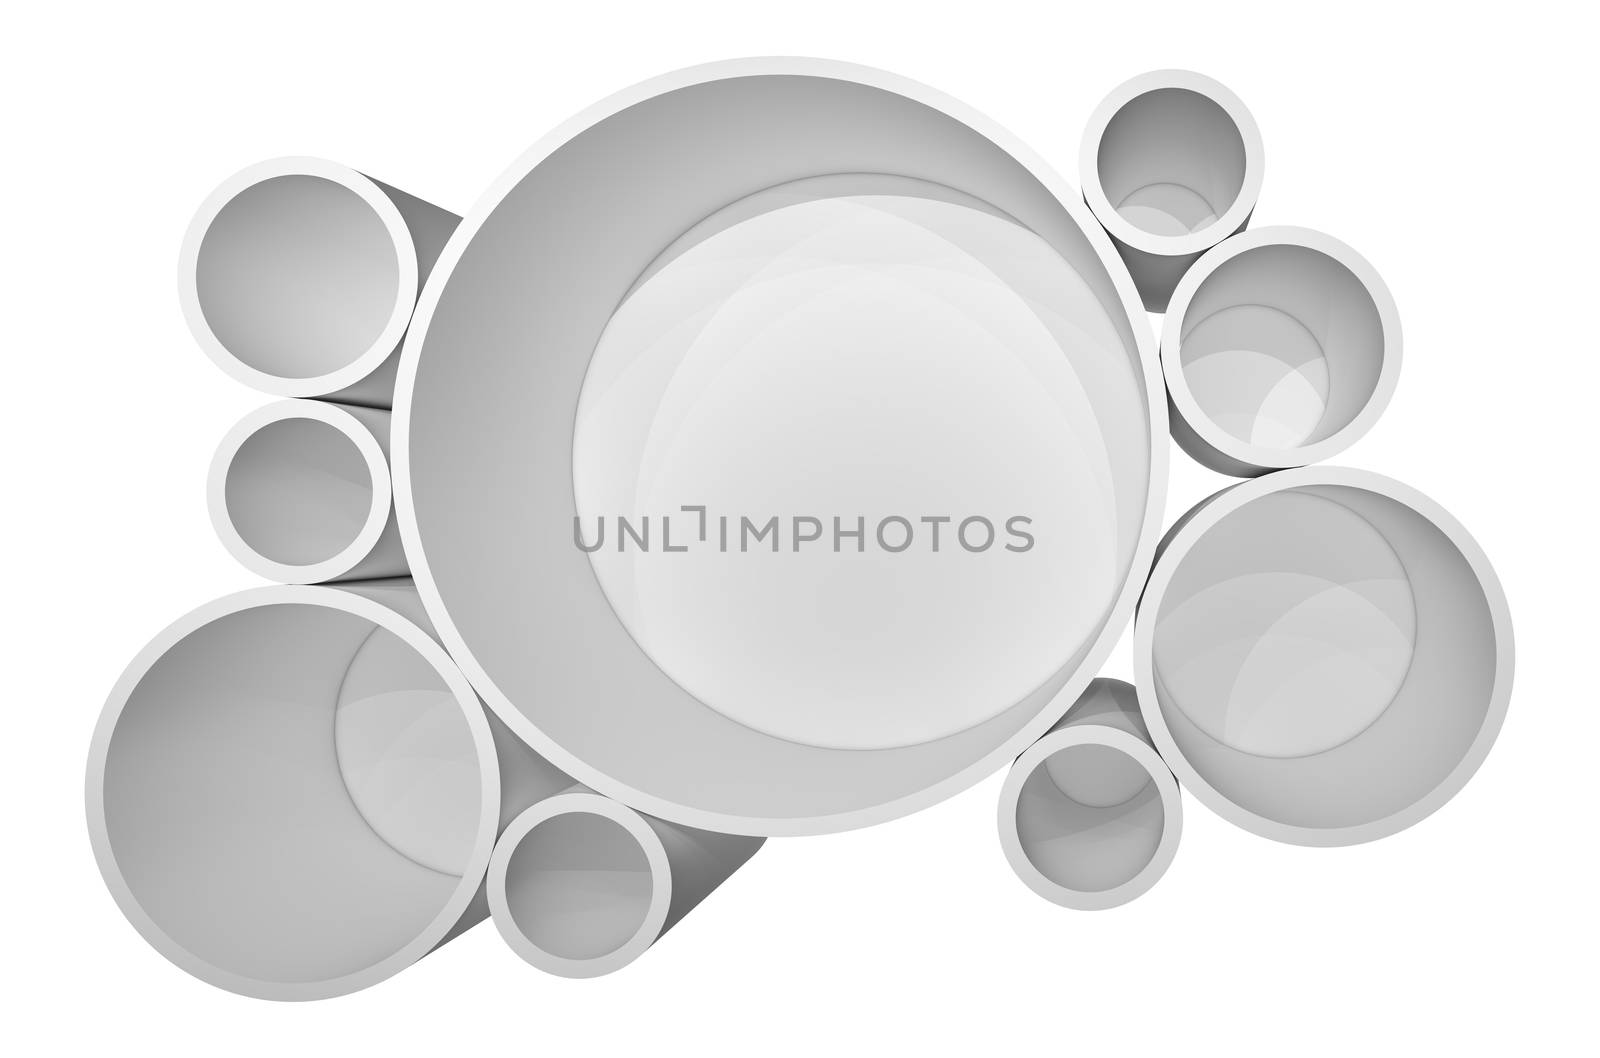 Illuminated circle white shelf for presentations by cherezoff